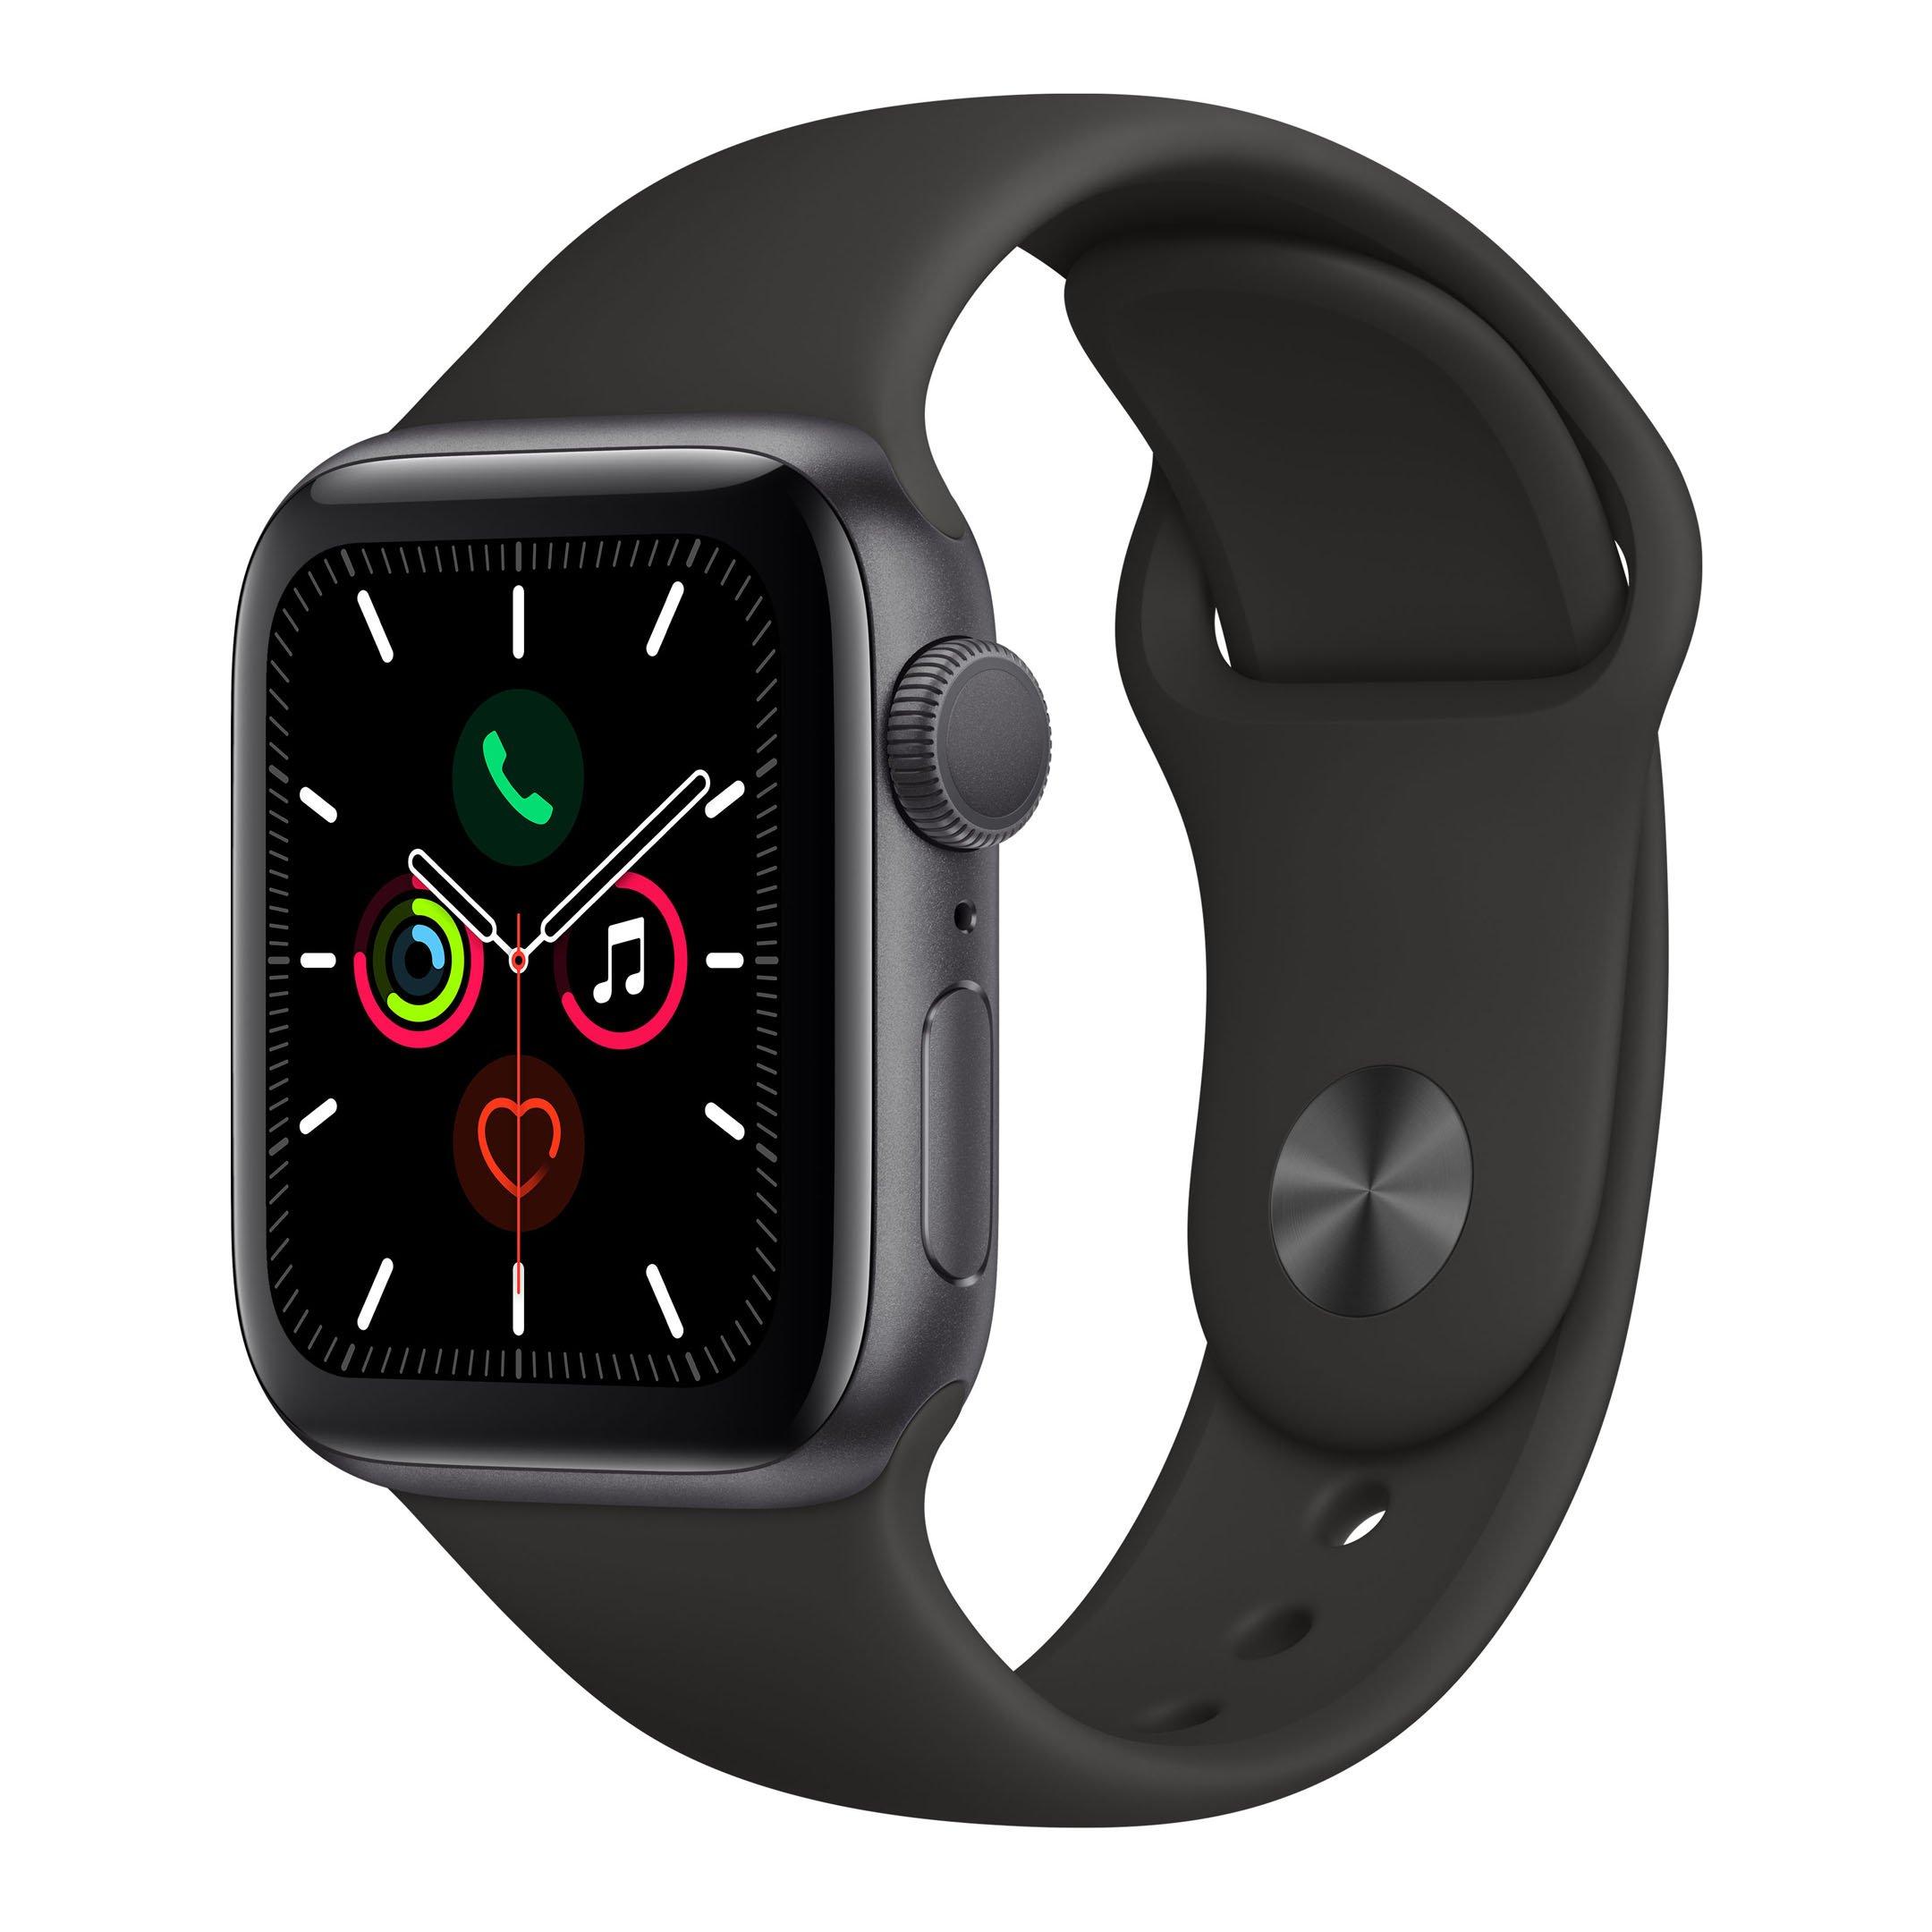 Apple Watch Series 5 ، 40mm ، GPS ، إطار رمادي ، حزام رياضي أسود ، Extra Oman